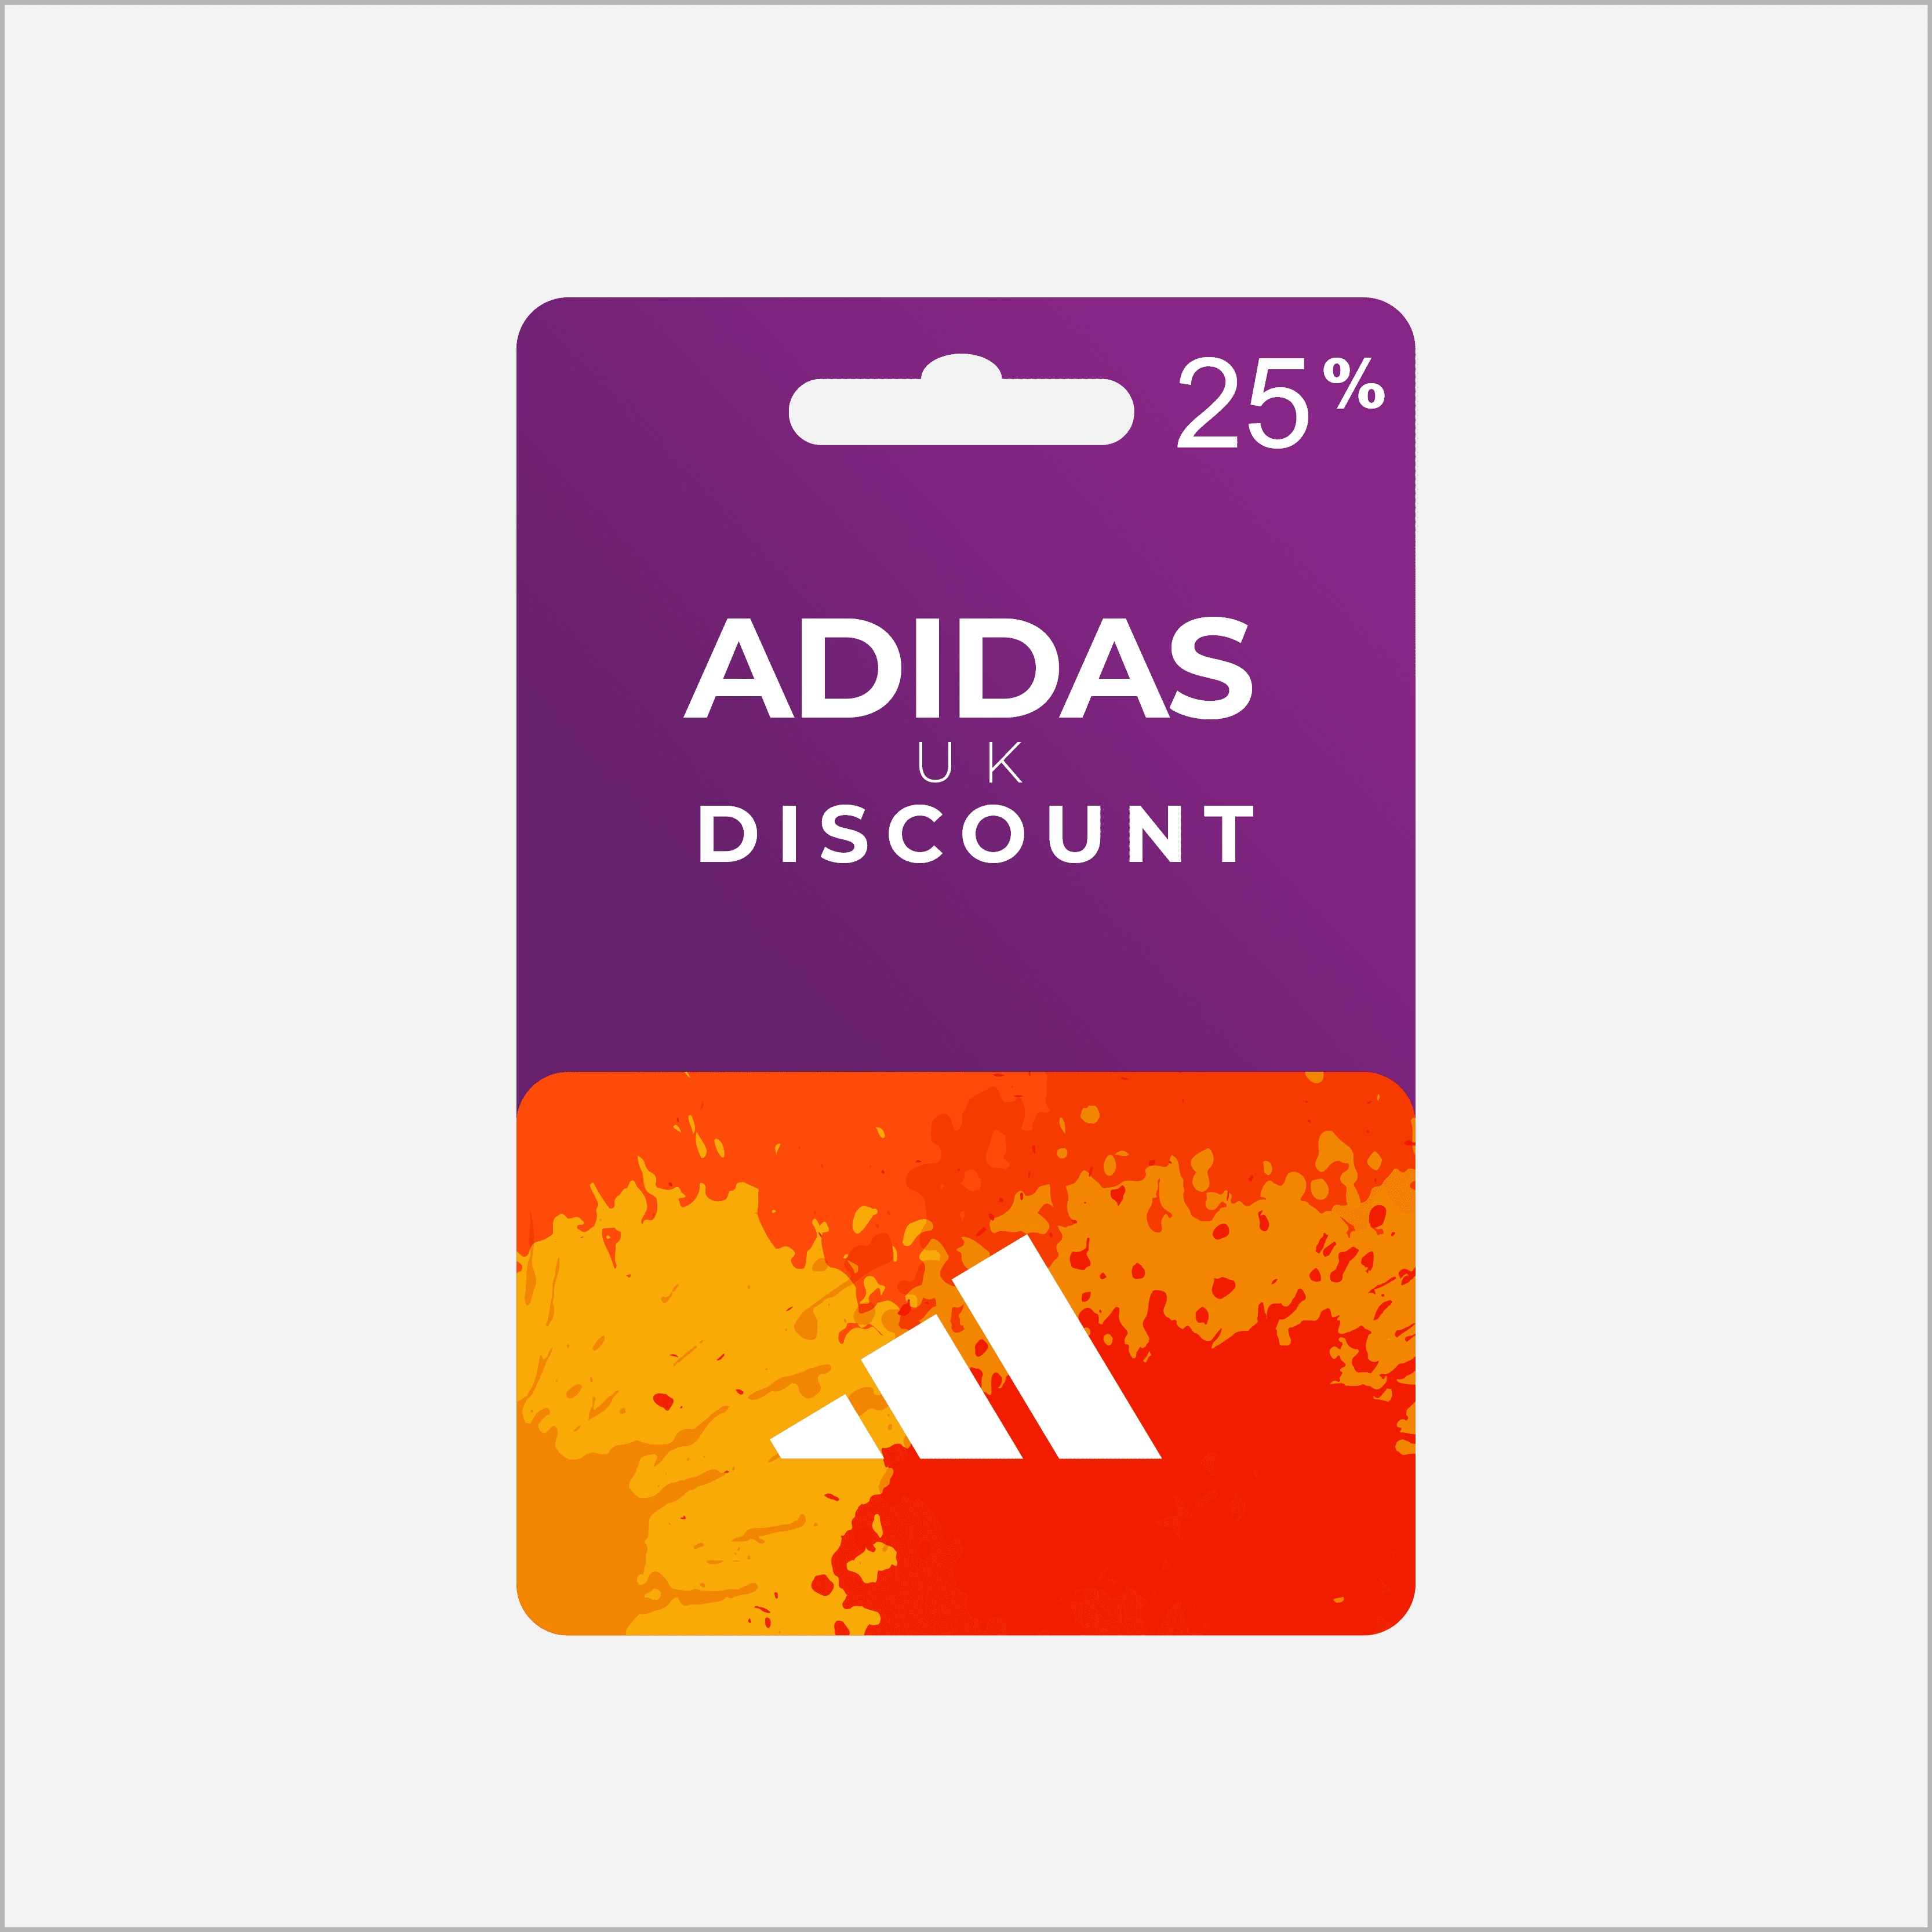 Adidas uk 25% discount code